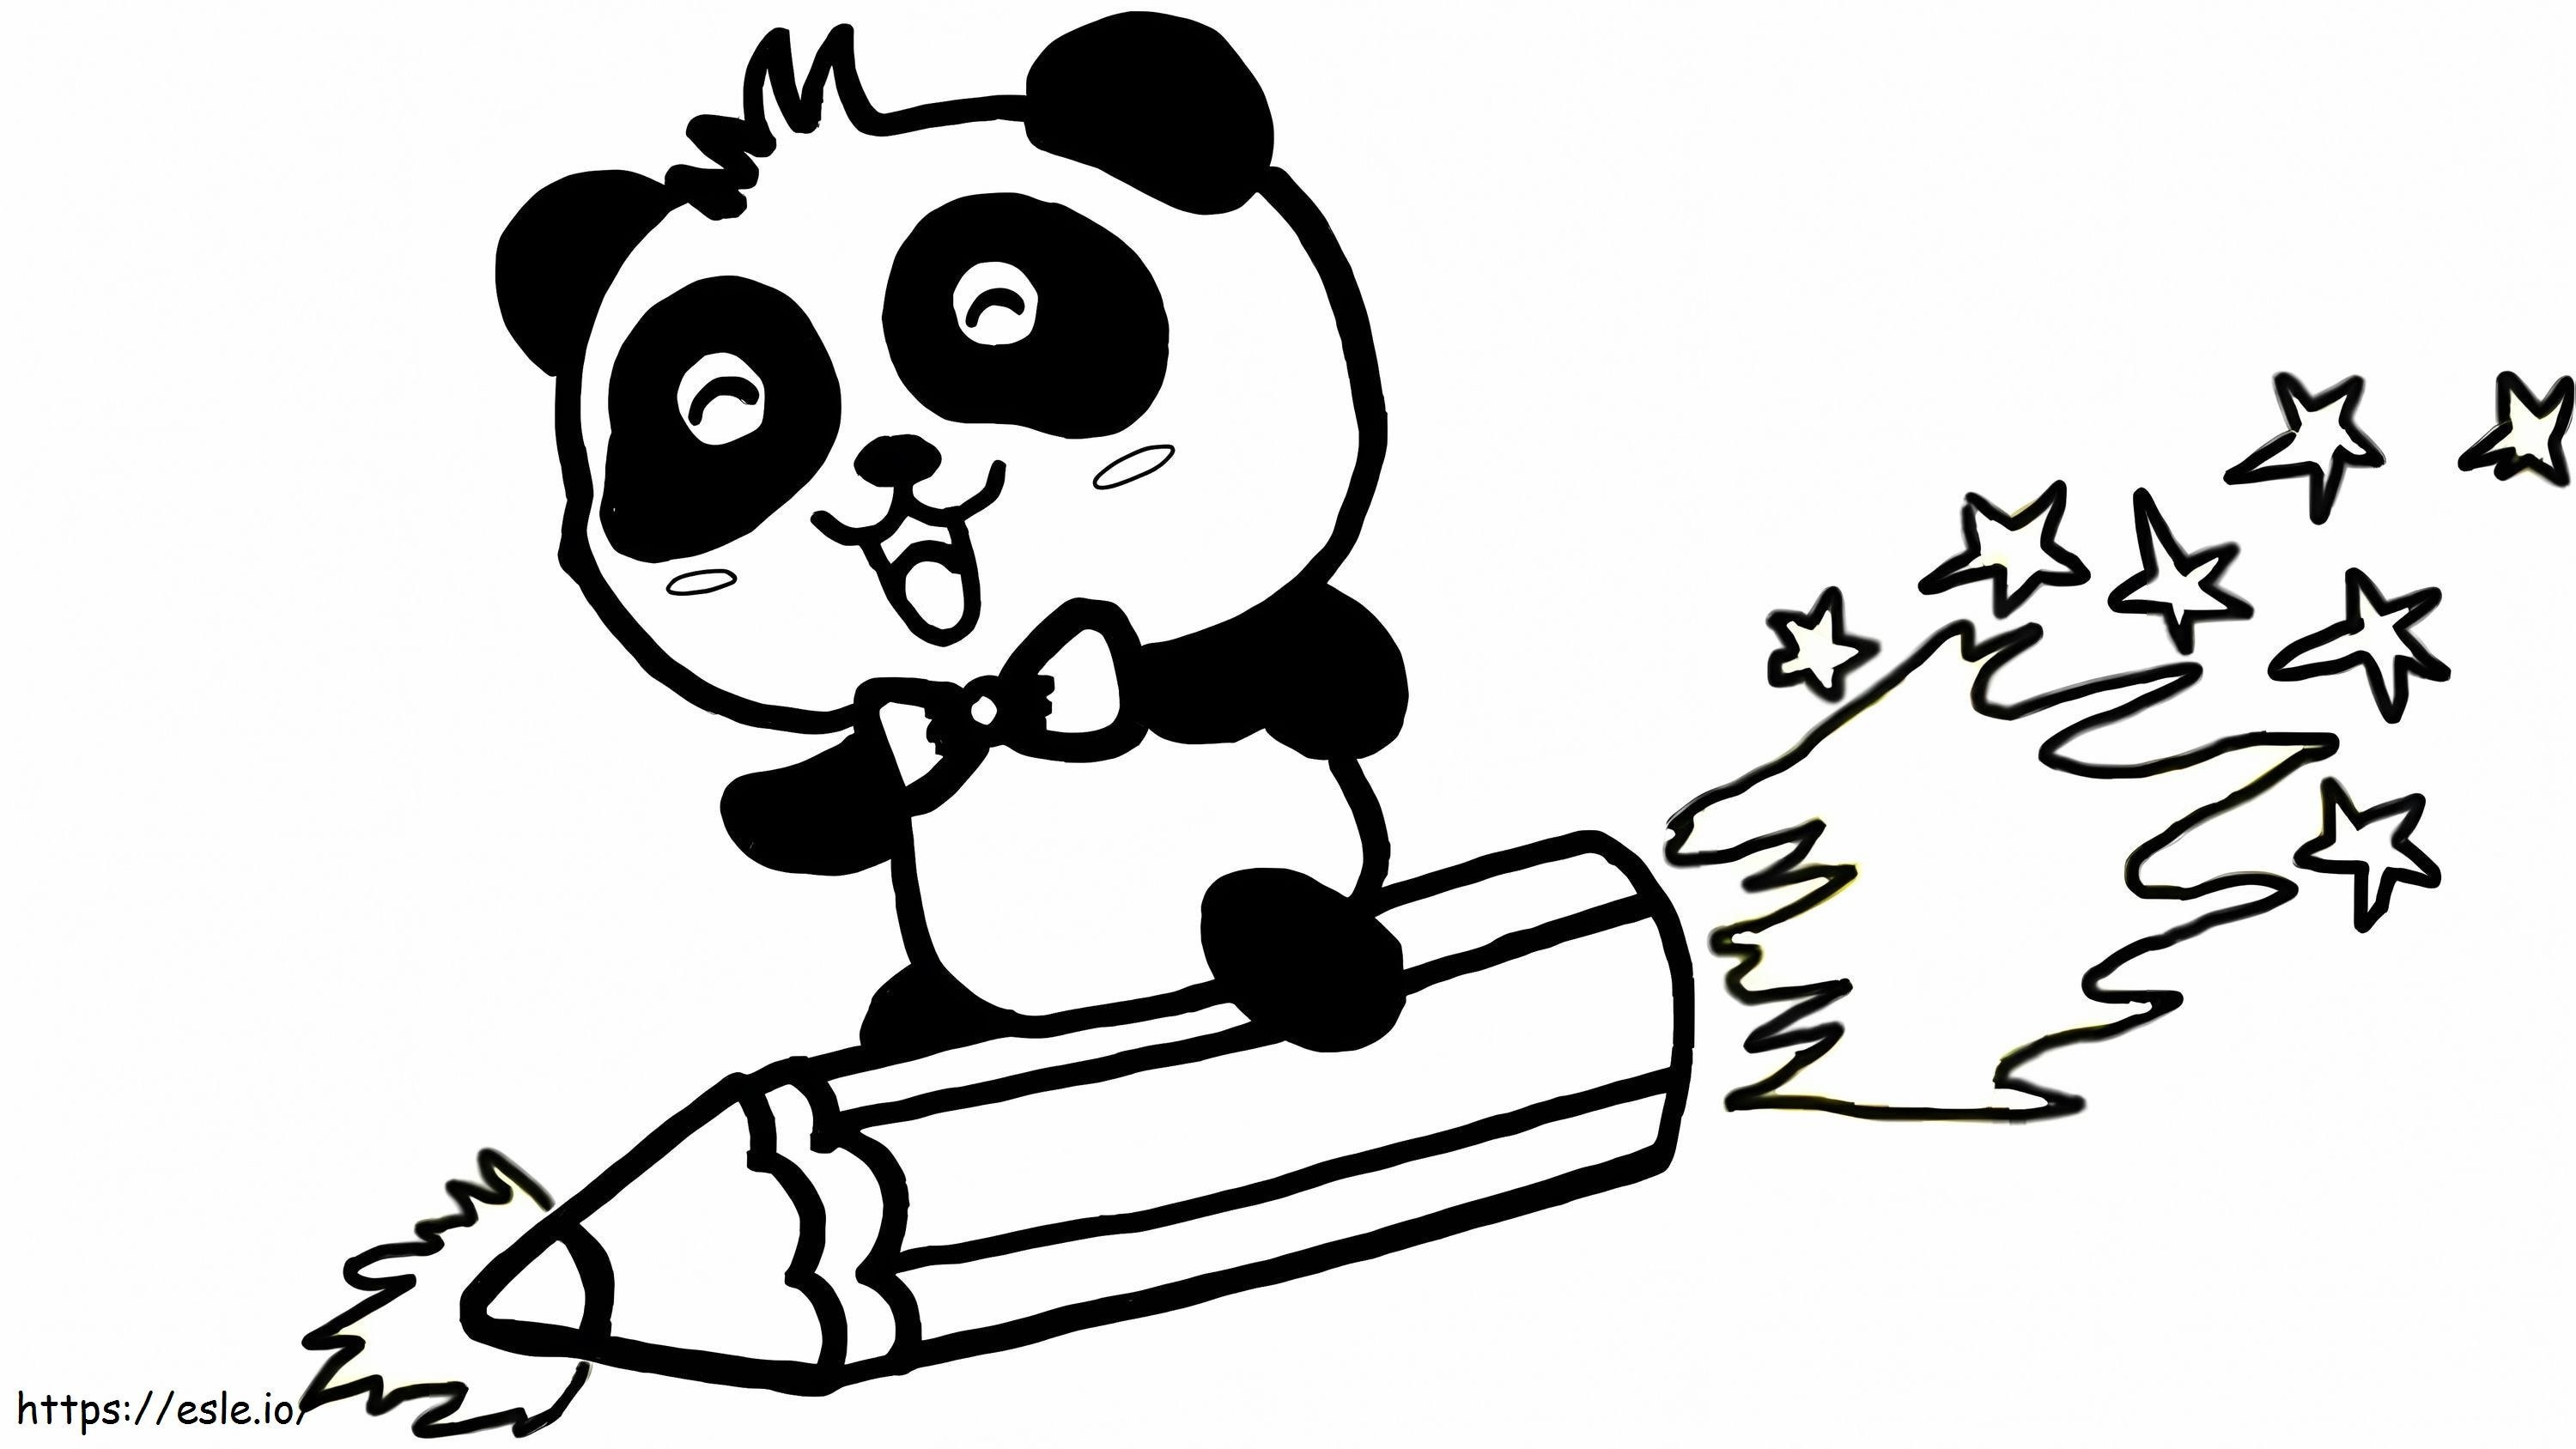 Panda met potloodraket kleurplaat kleurplaat